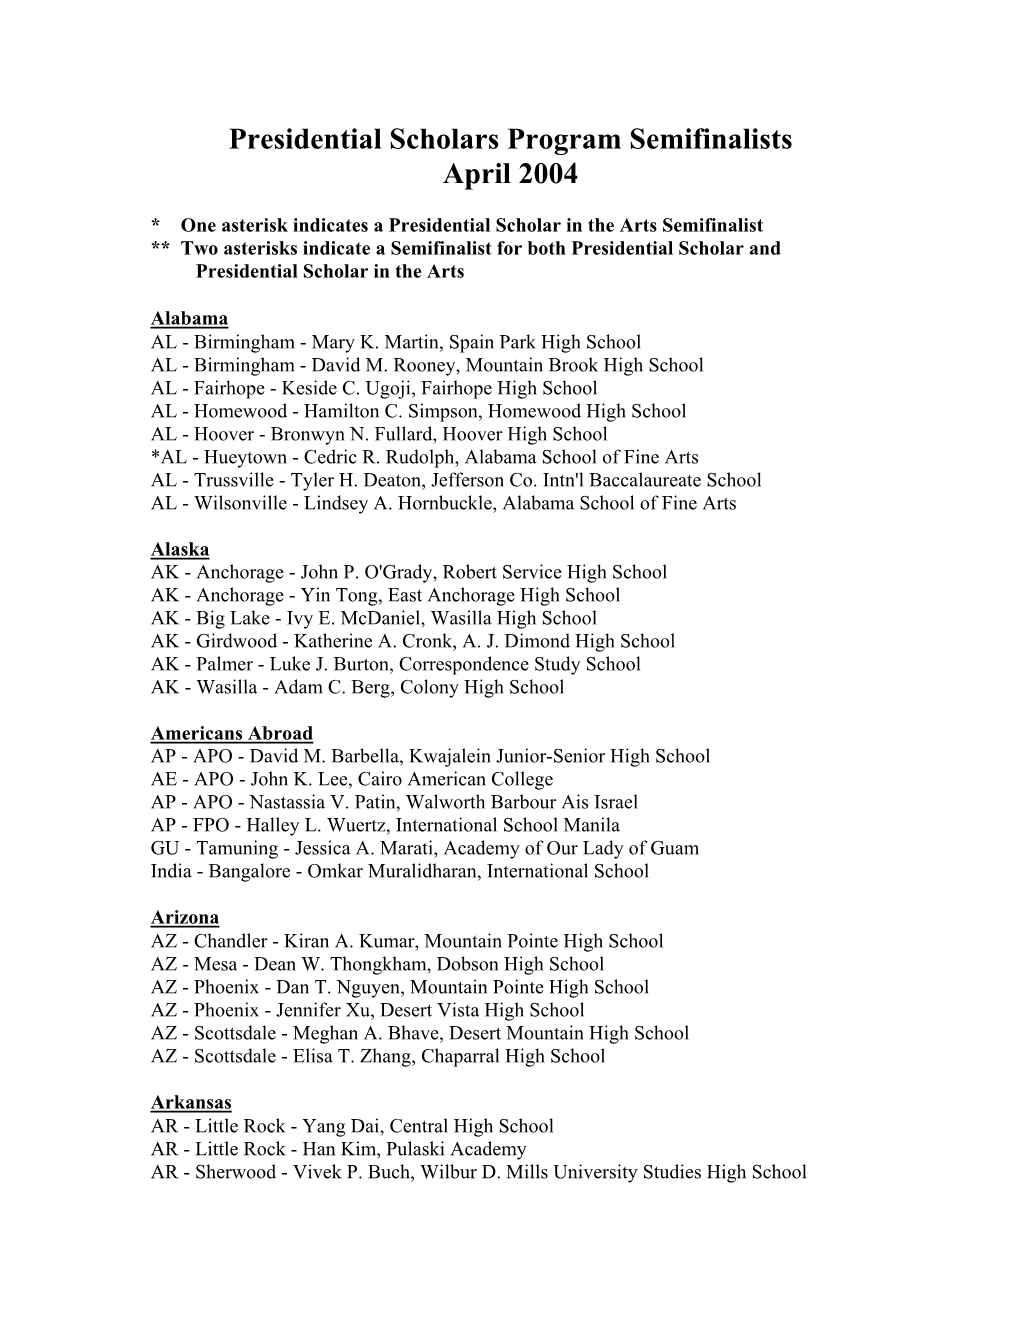 Presidential Scholars Program Semifinalists April 2004